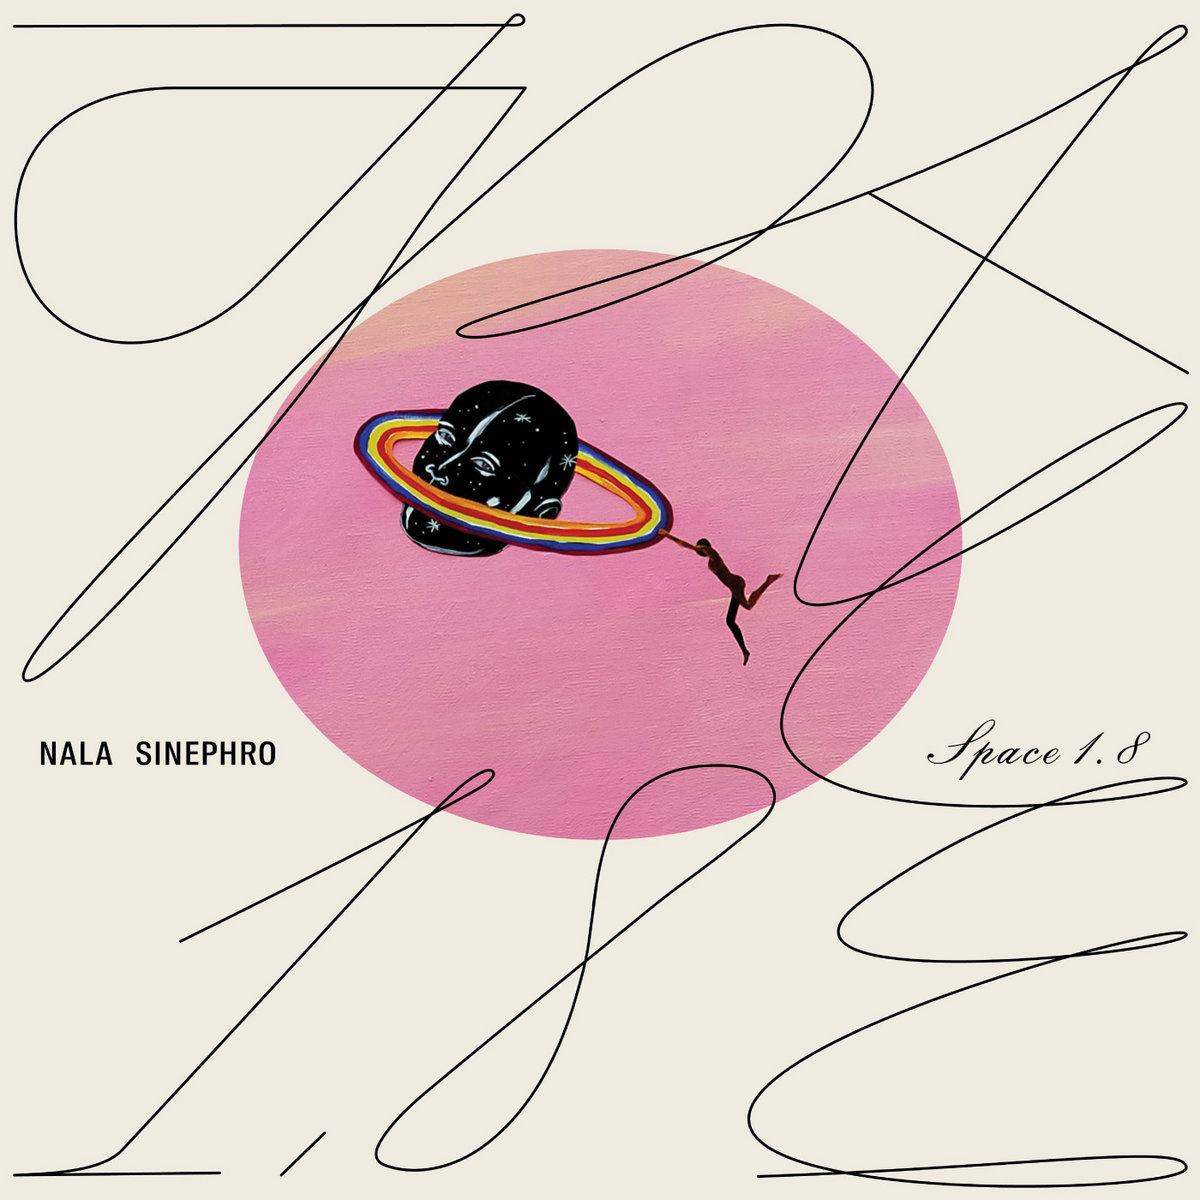 Album of the Month January 2022 Nala Sinephro - Space 1.8